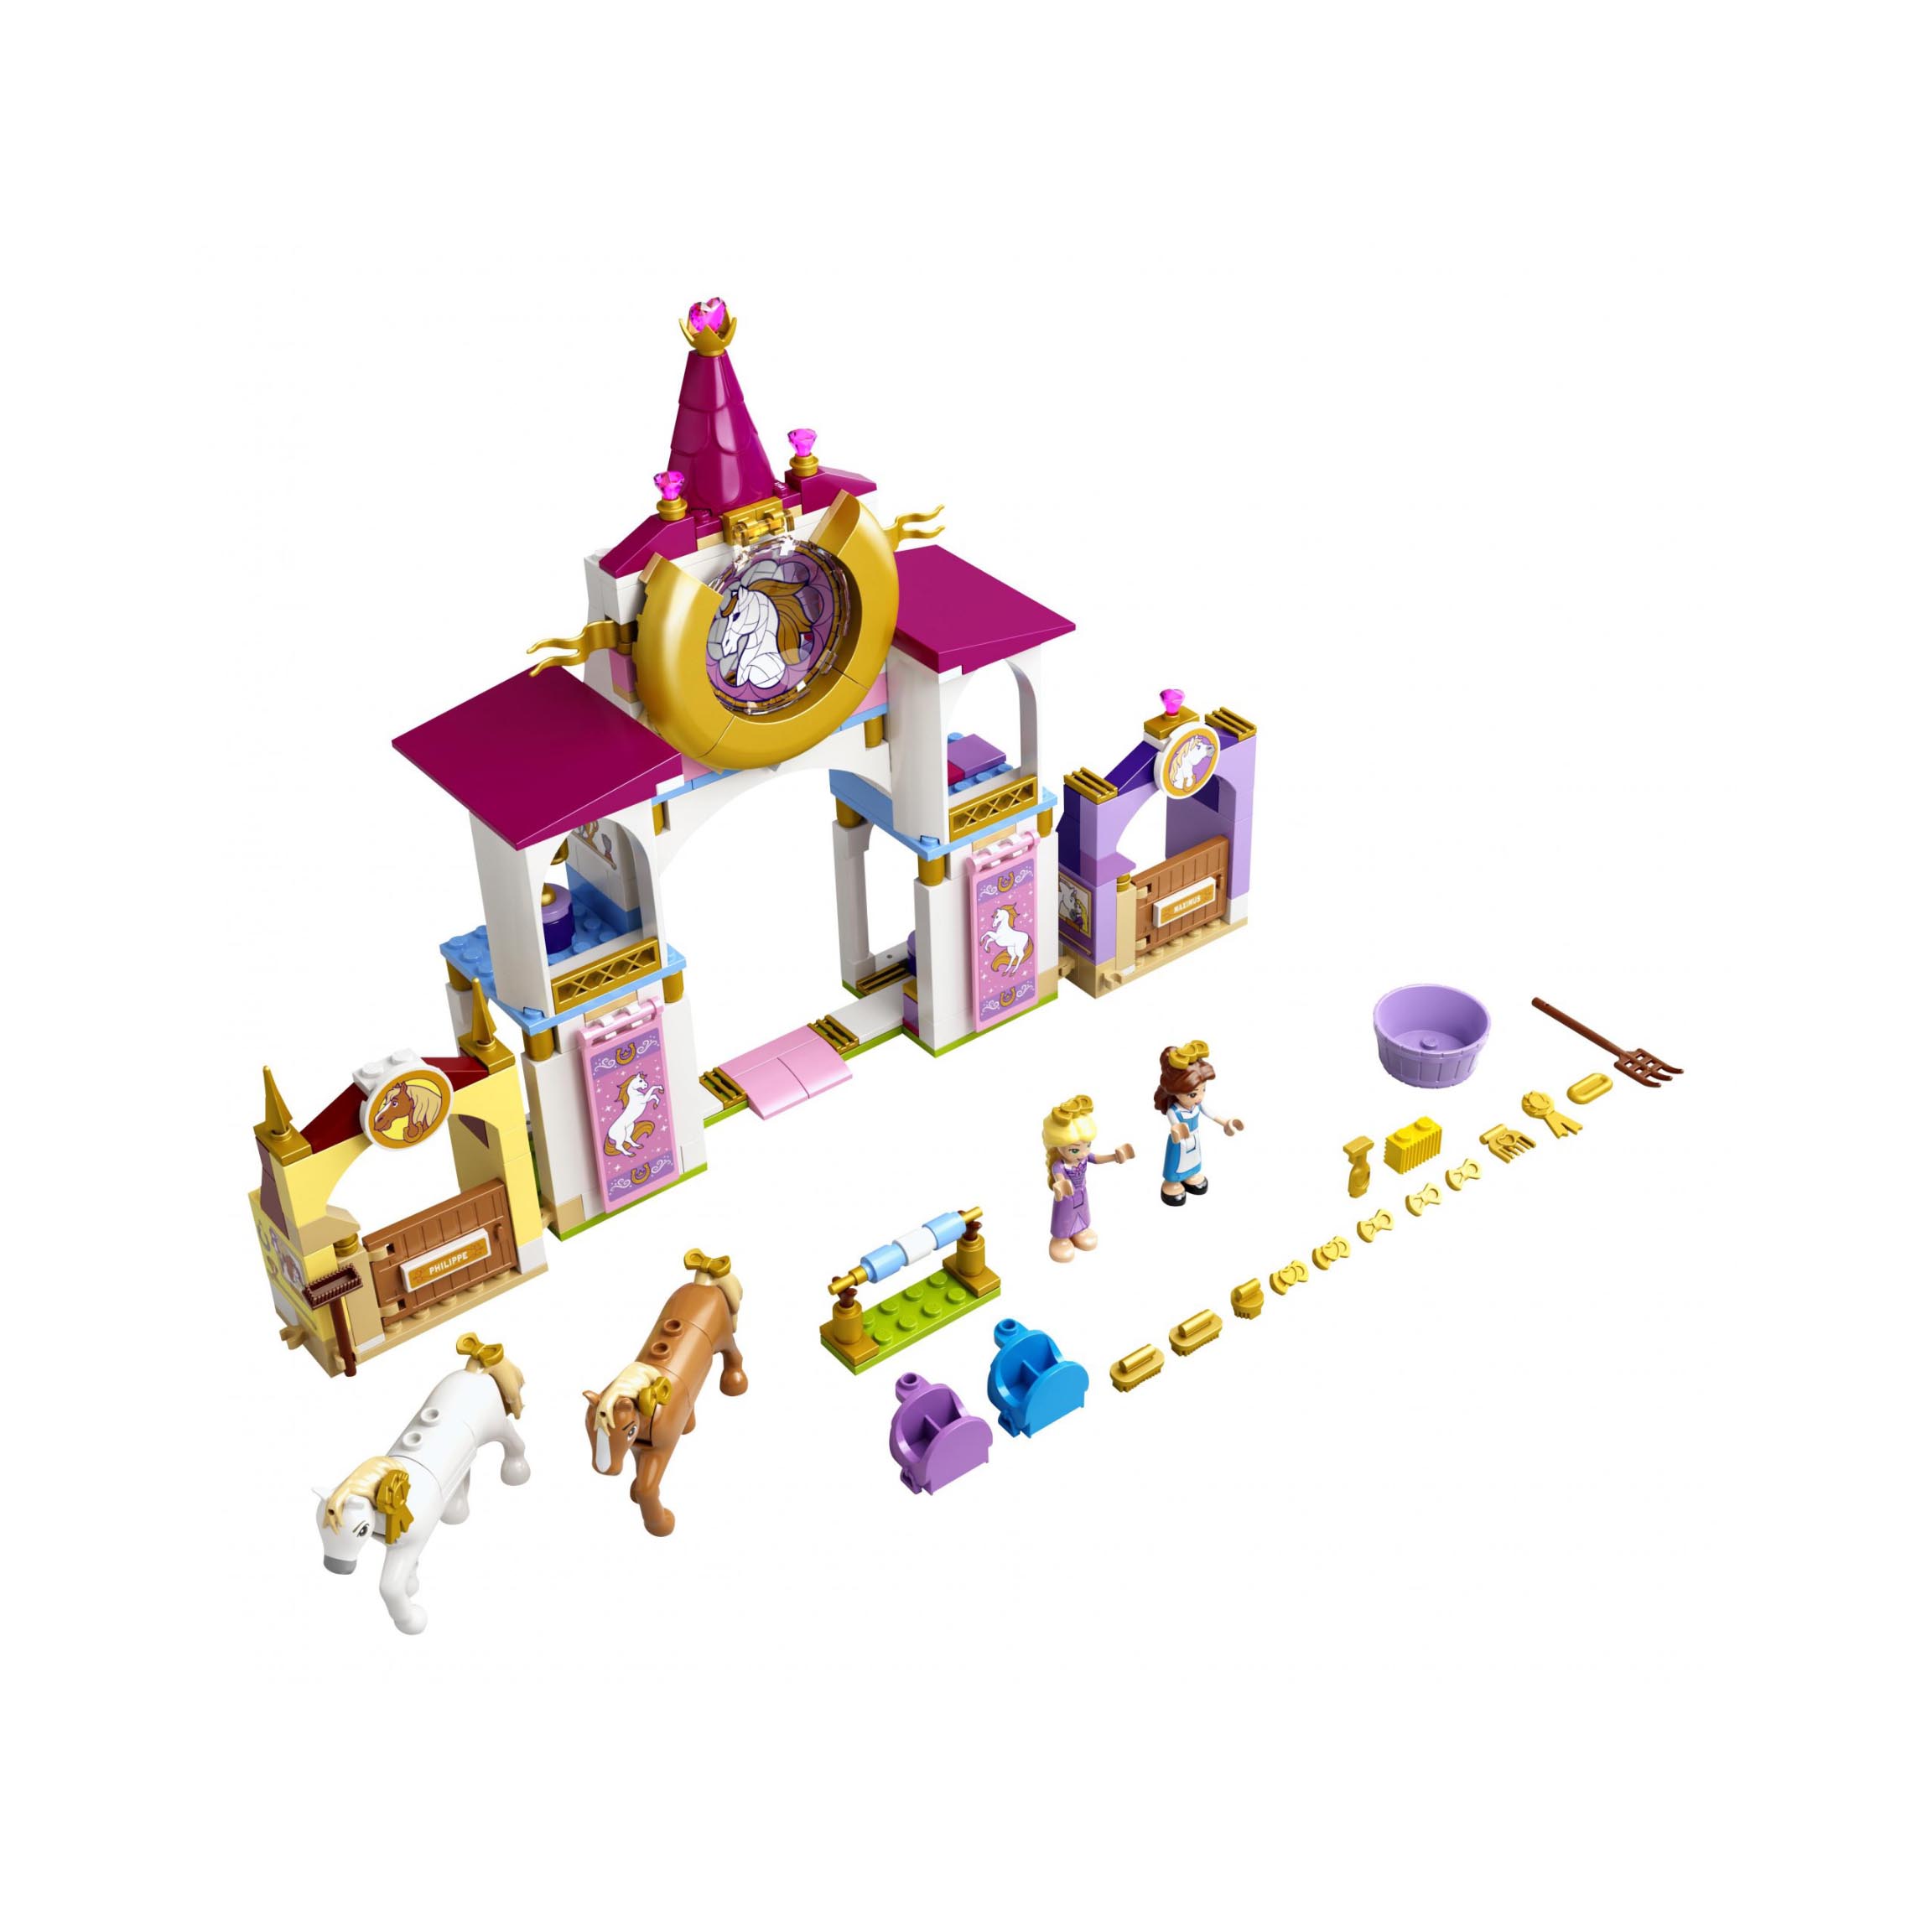 LEGO Disney Princess Le Scuderie Reali di Belle e Rapunzel, Set da Costruzione c 43195, , large